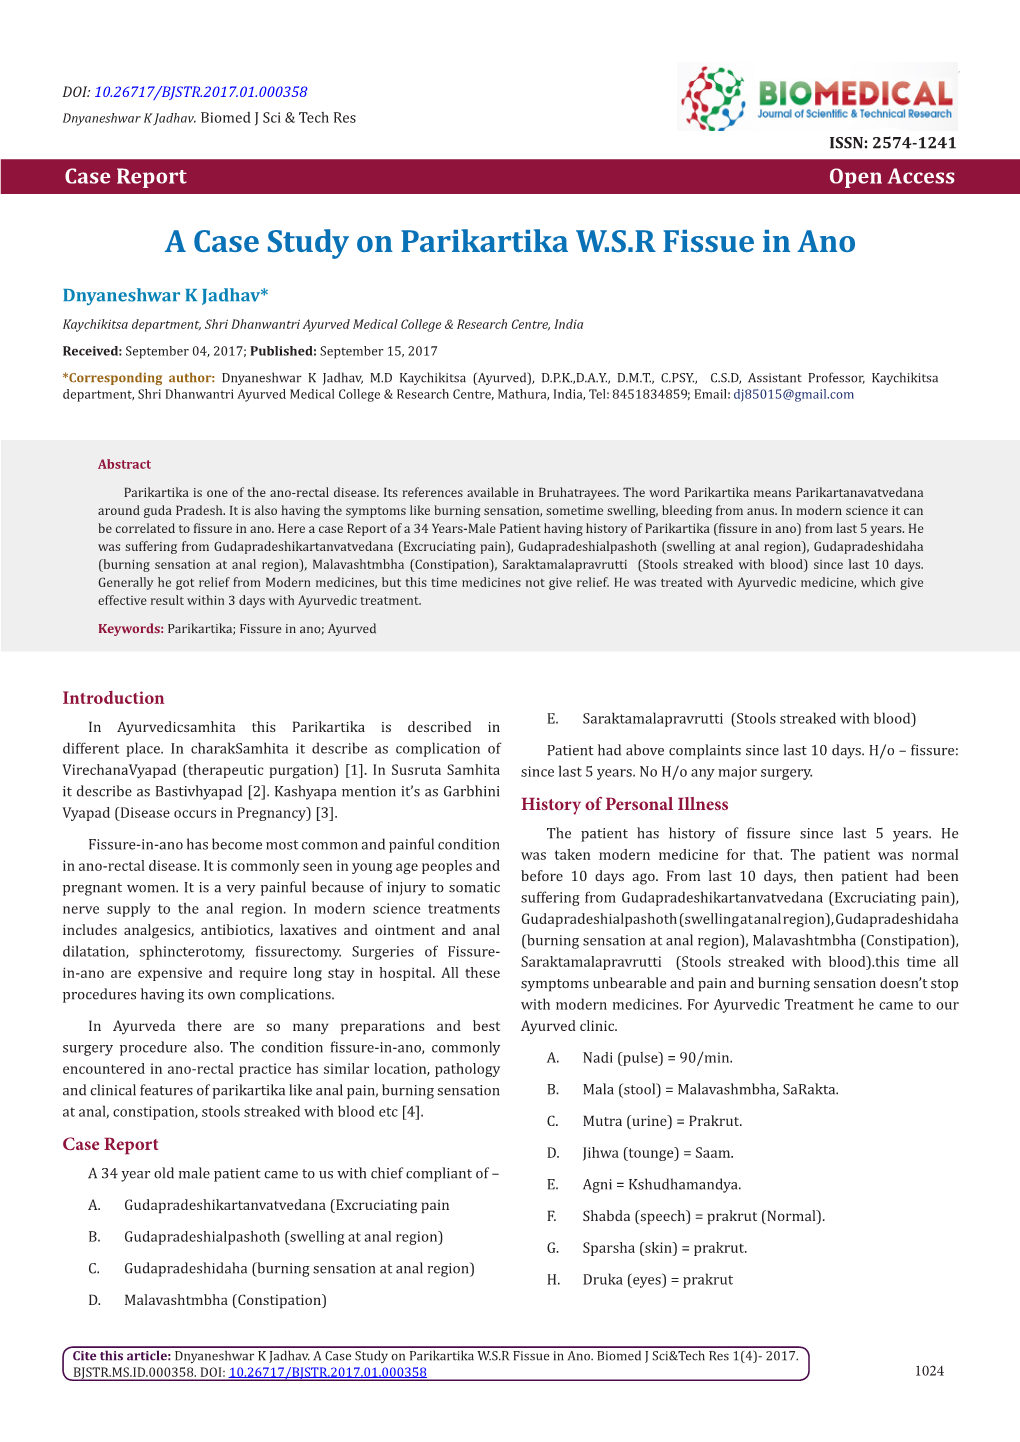 A Case Study on Parikartika W.S.R Fissue in Ano